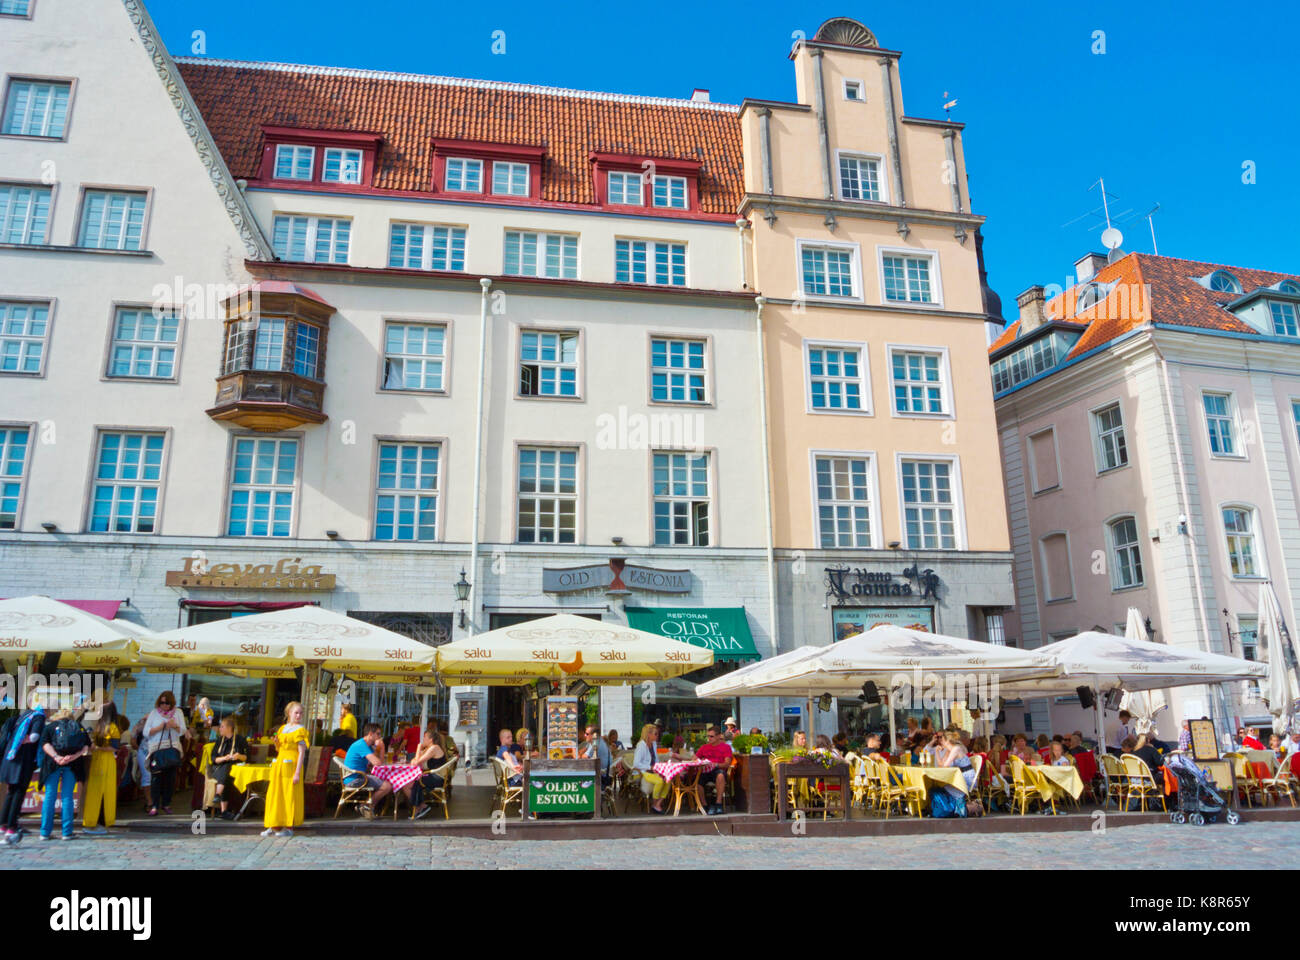 Terrasses de restaurants, Raekoja plats, place de la mairie, Vanalinn, vieille ville, Tallinn, Estonie Banque D'Images